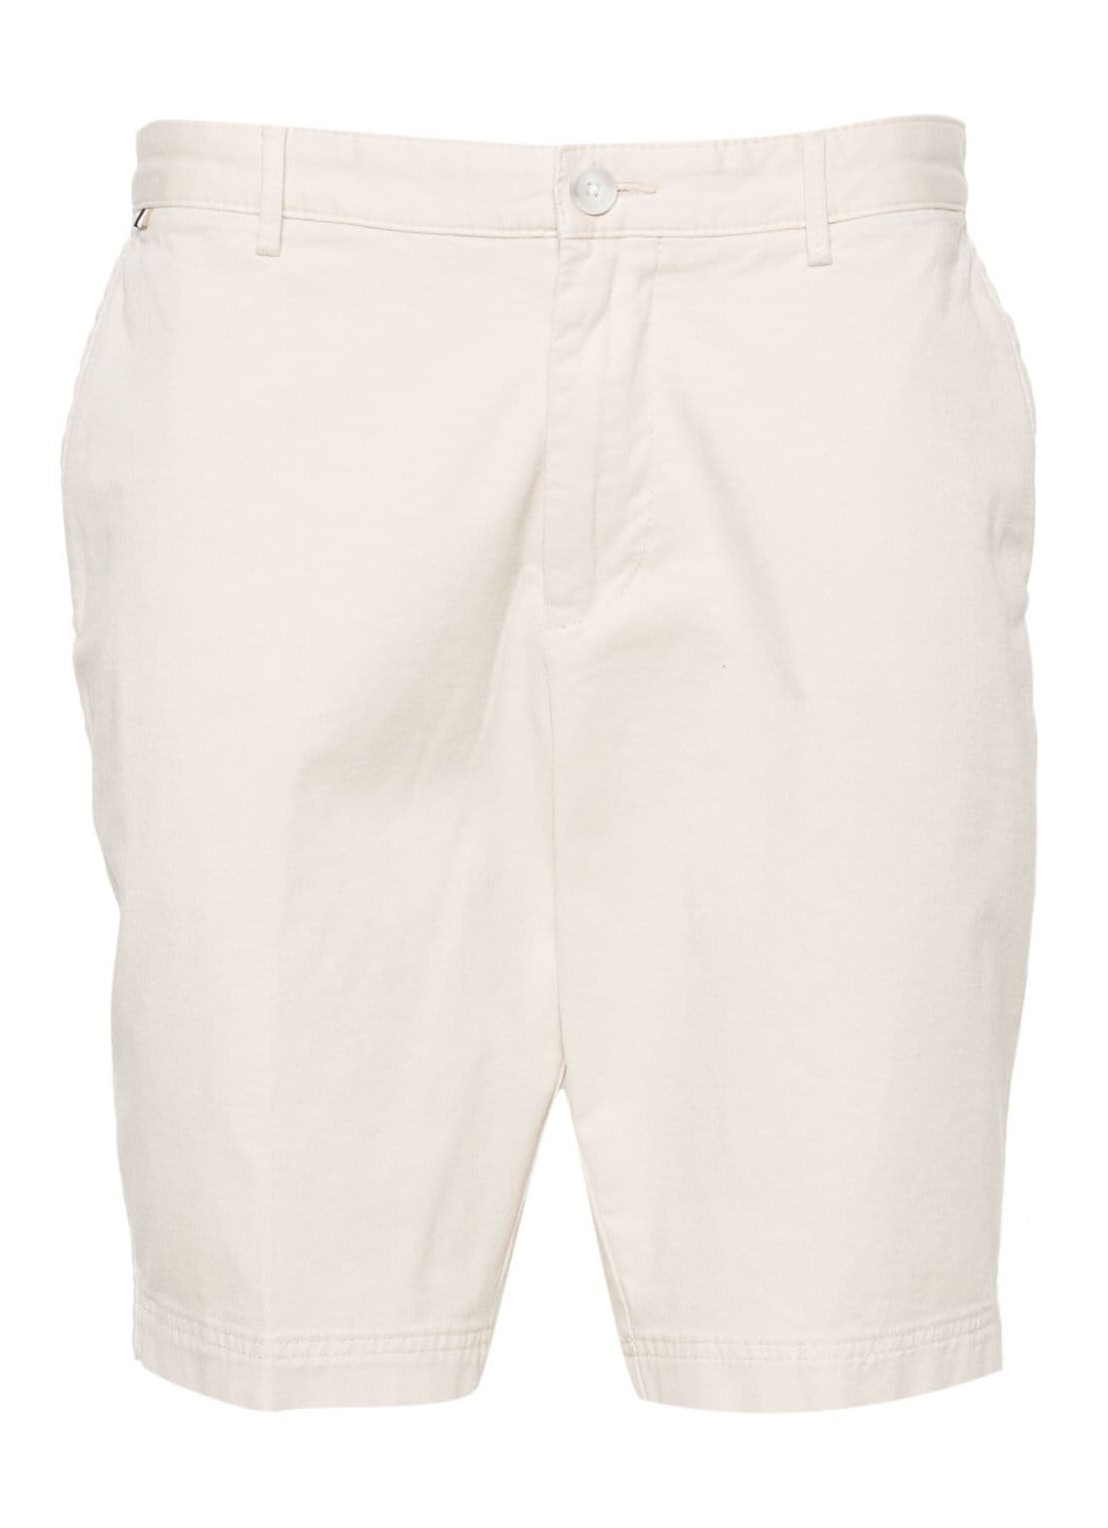 Pantalon corto boss short pant man slice-short 50487993 102 talla 56
 